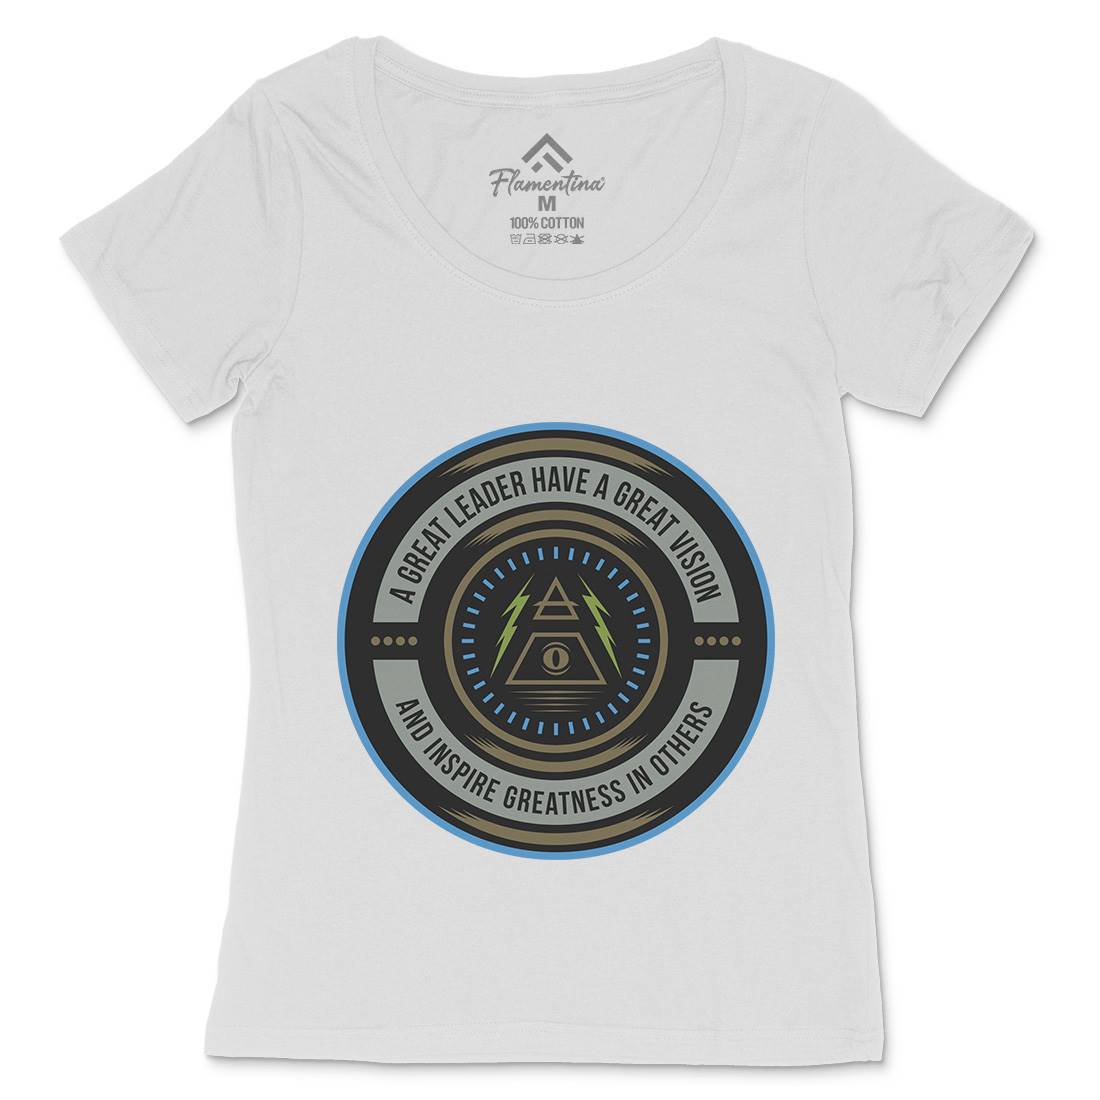 Great Vision Womens Scoop Neck T-Shirt Illuminati A323